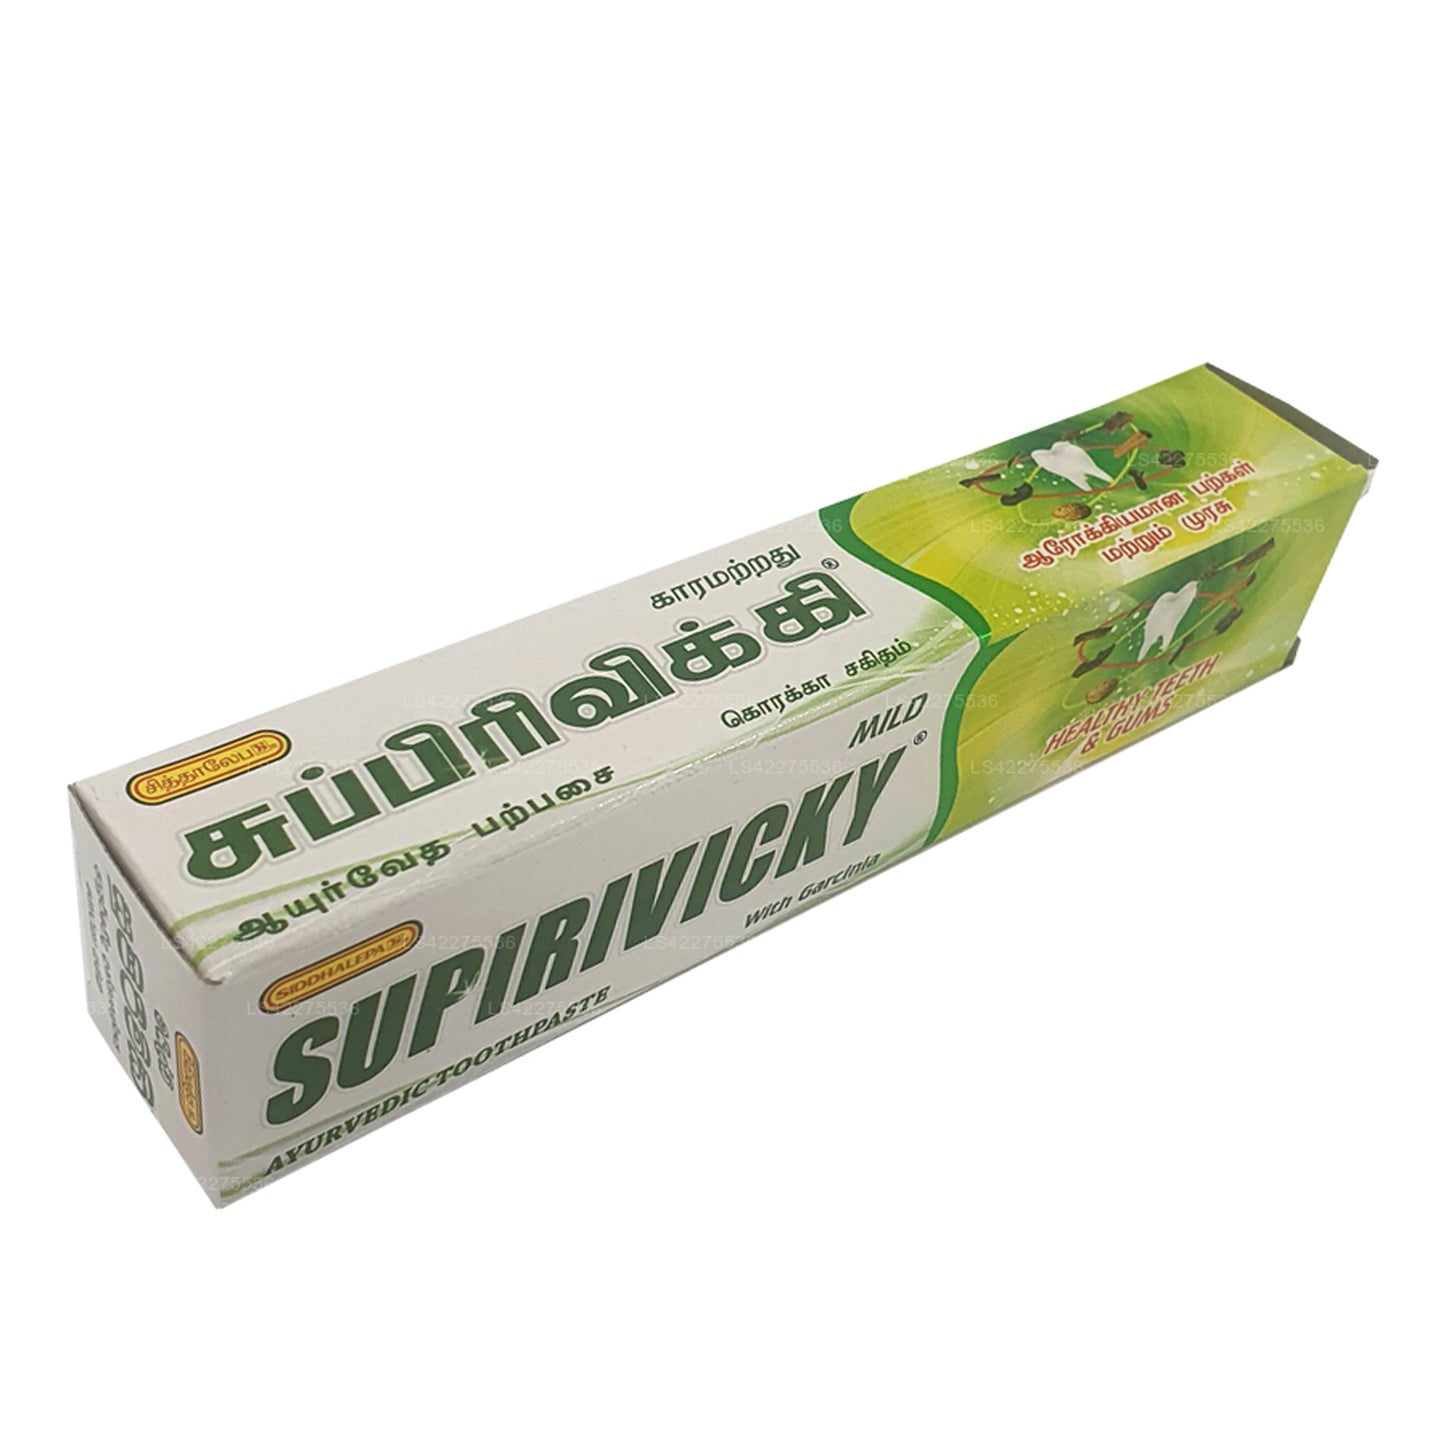 Siddhalepa Supirivicky Mild Ayurvedic Toothpaste